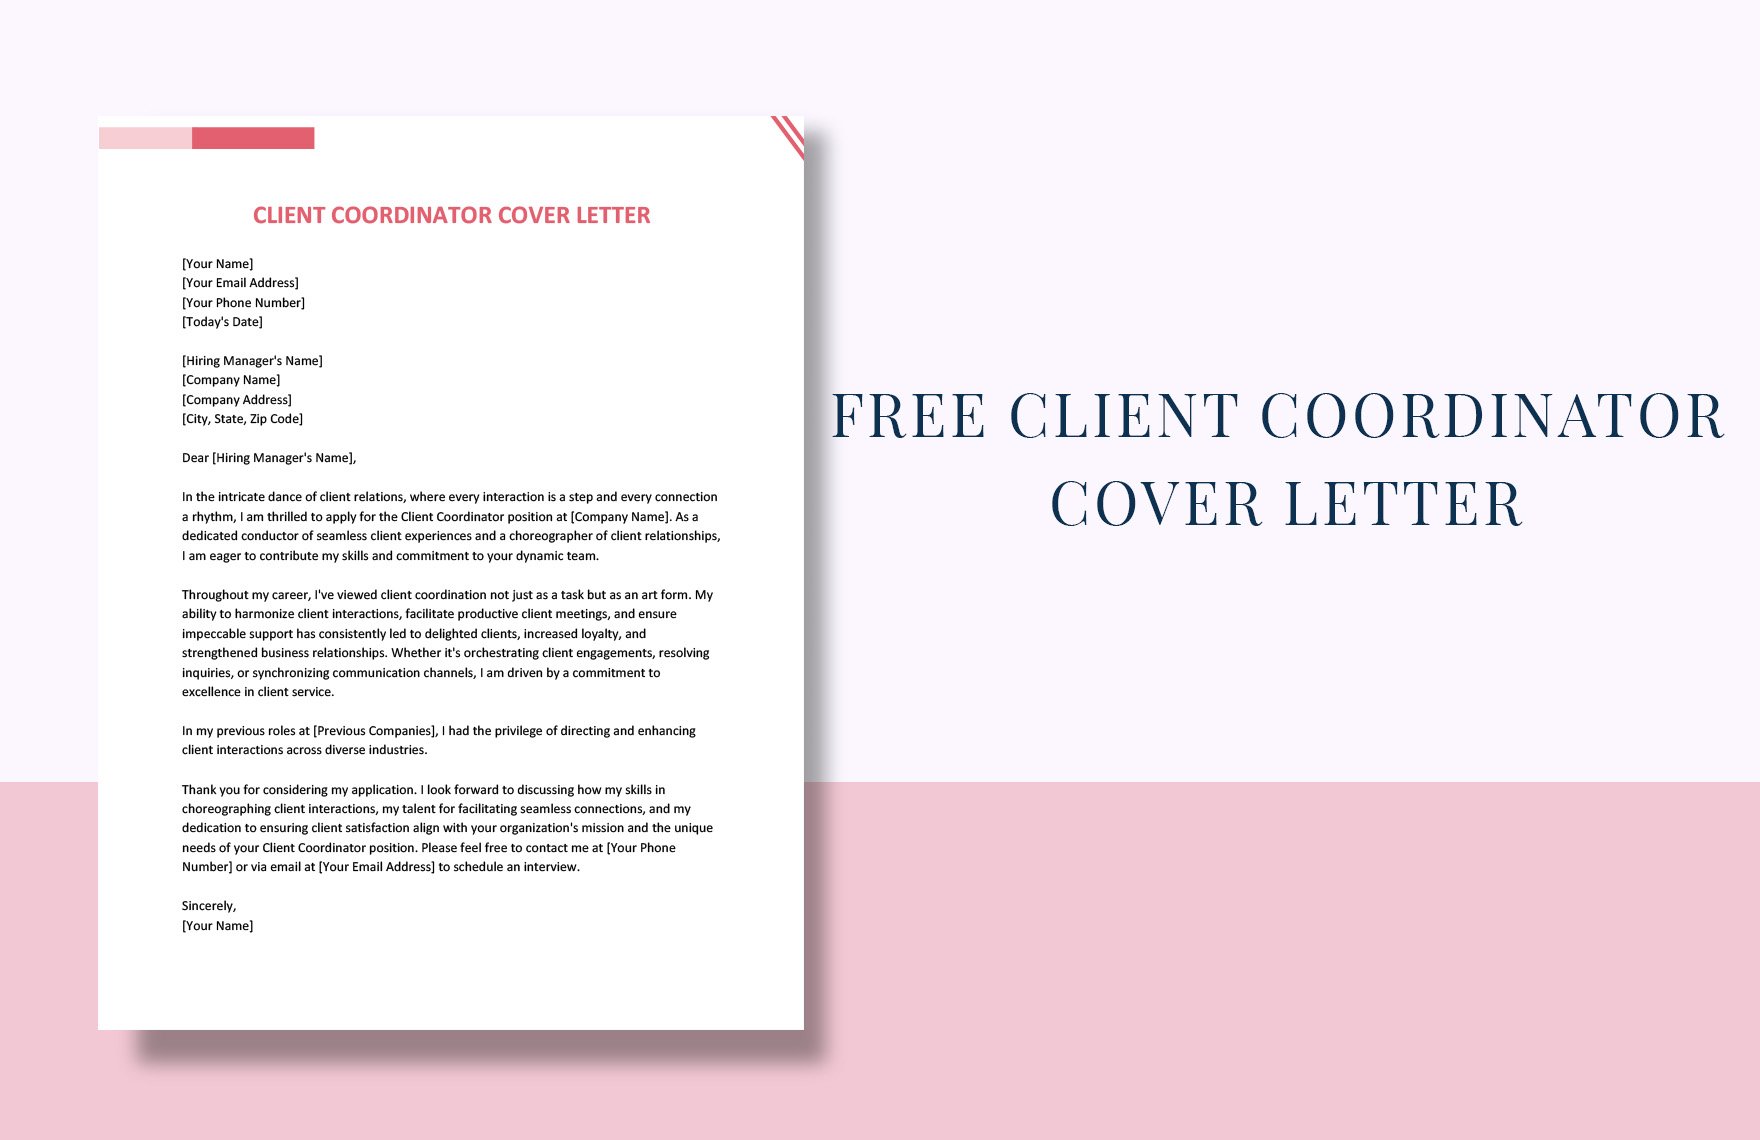 Client Coordinator Cover Letter